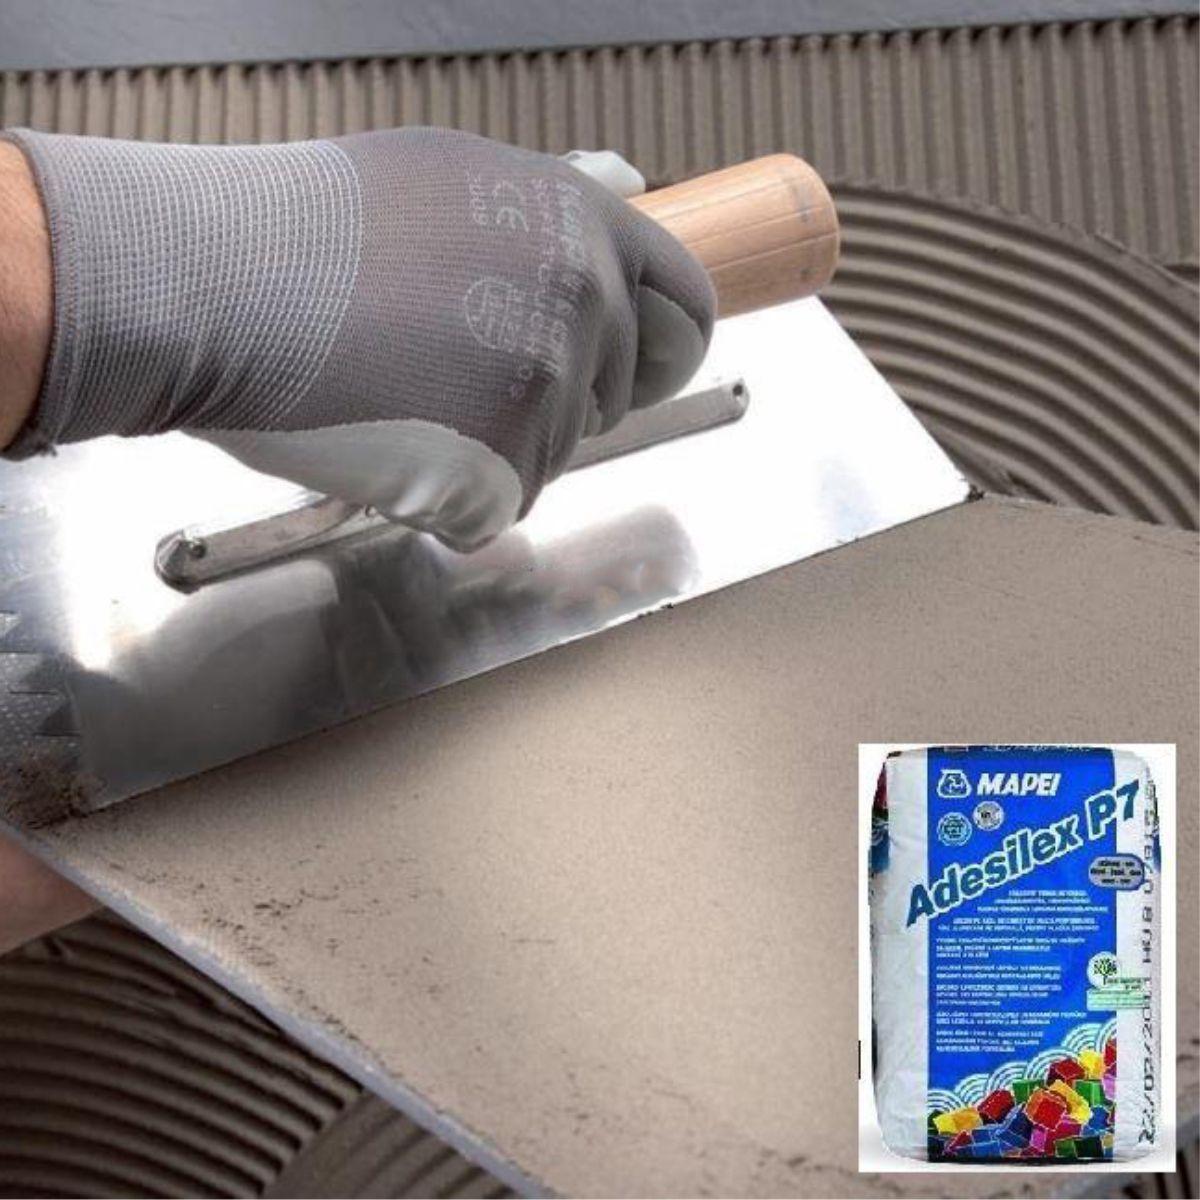 Adhesive cement